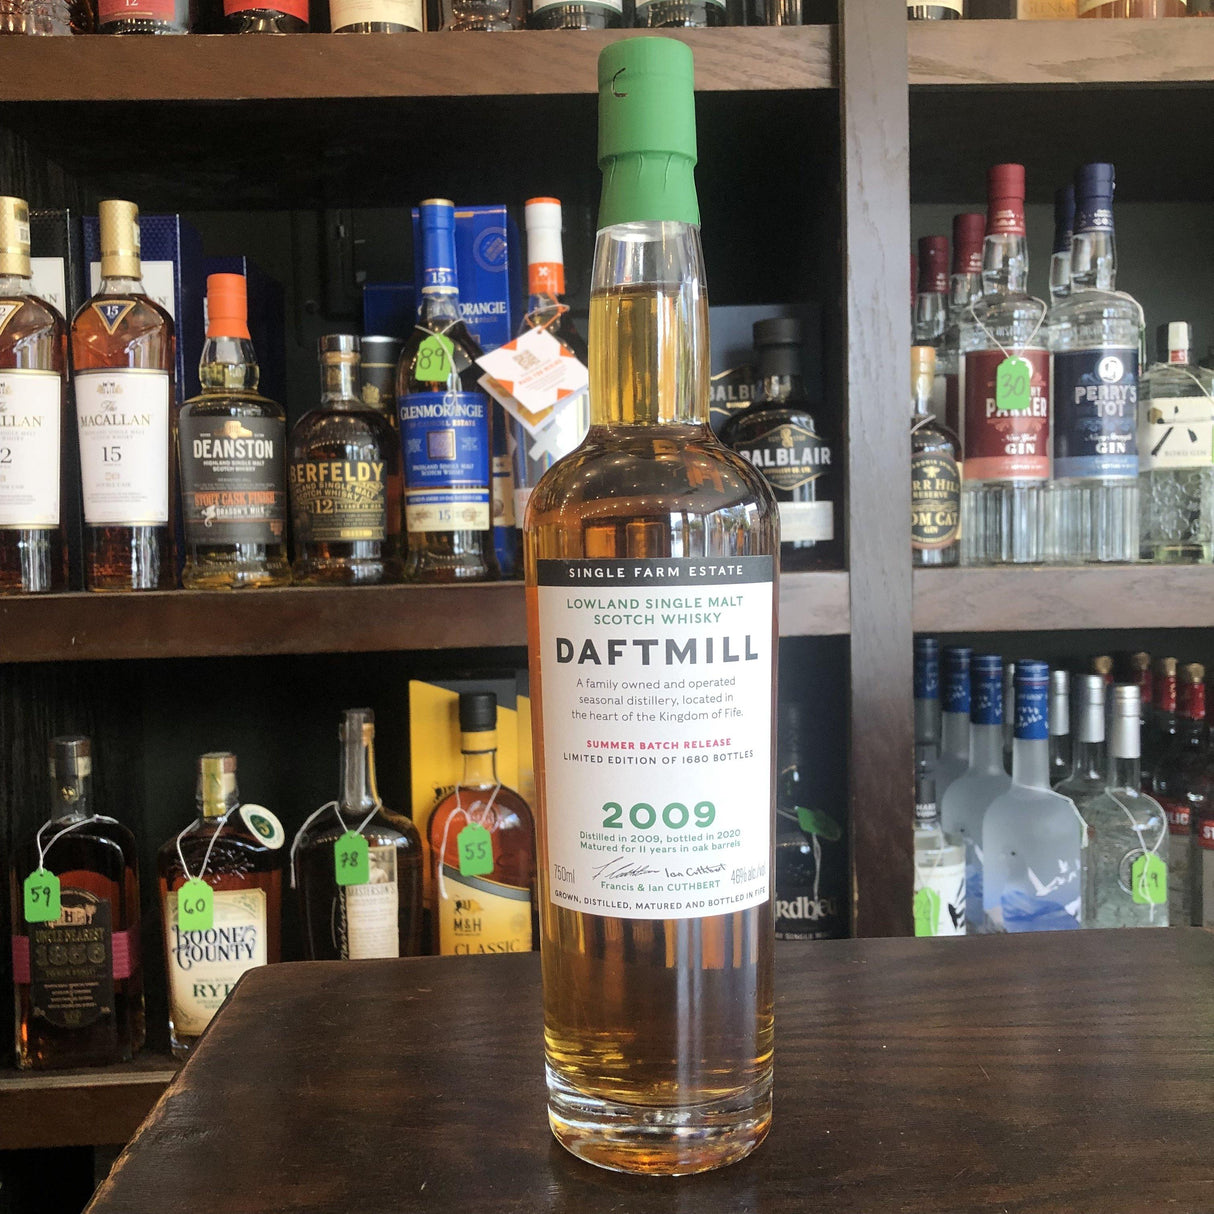 Daftmill 2009 Summer Batch Release Lowland Single Malt Scotch Whisky 750ml